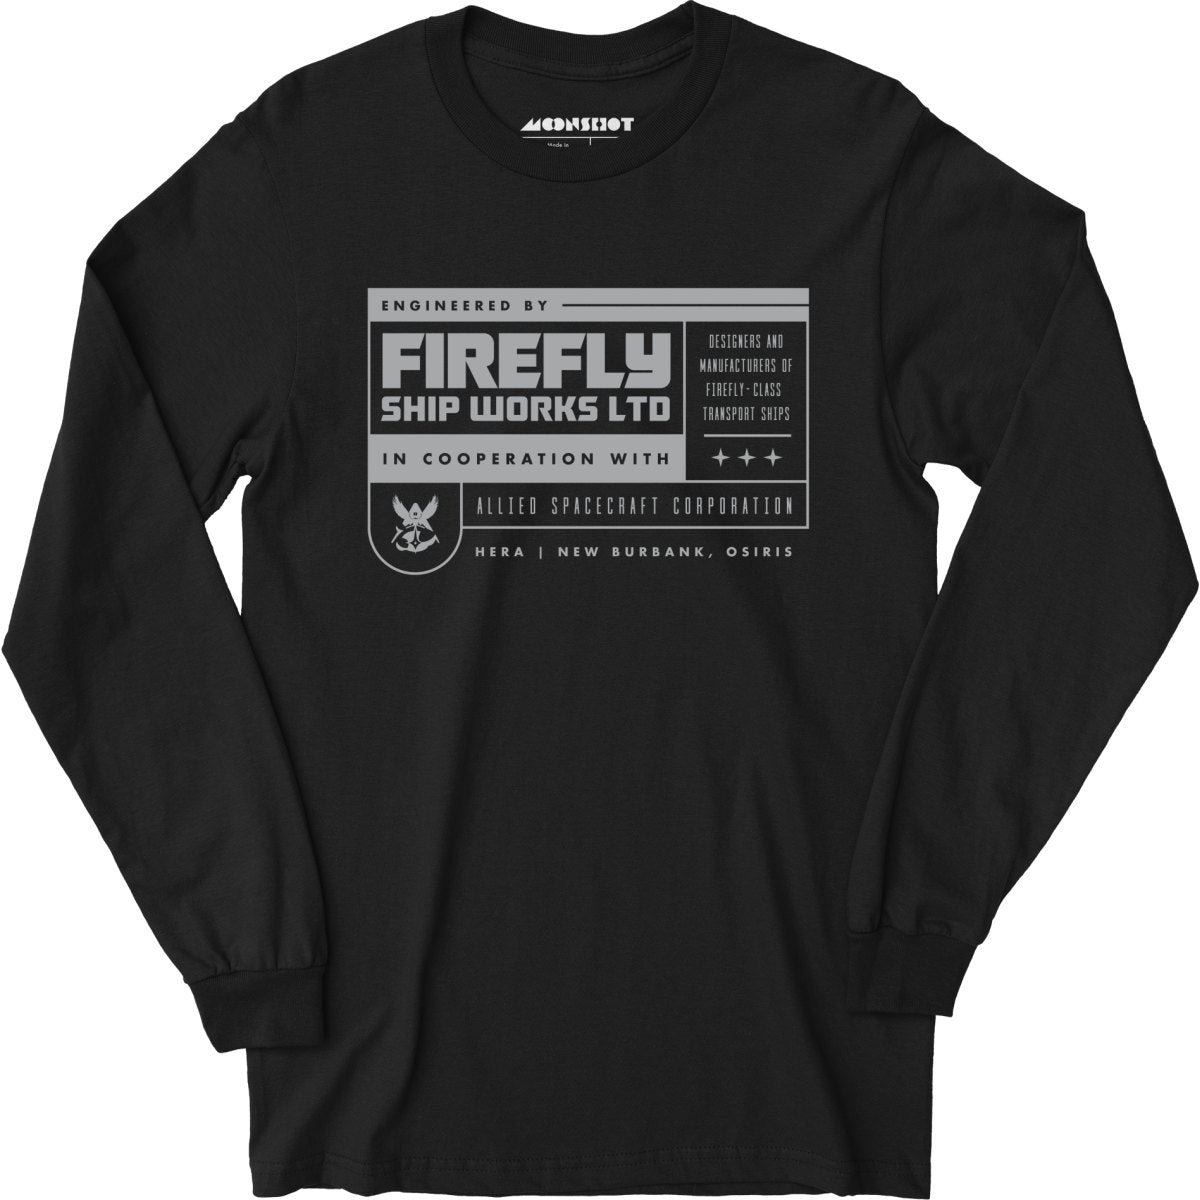 Firefly Ship Works Ltd. - Long Sleeve T-Shirt